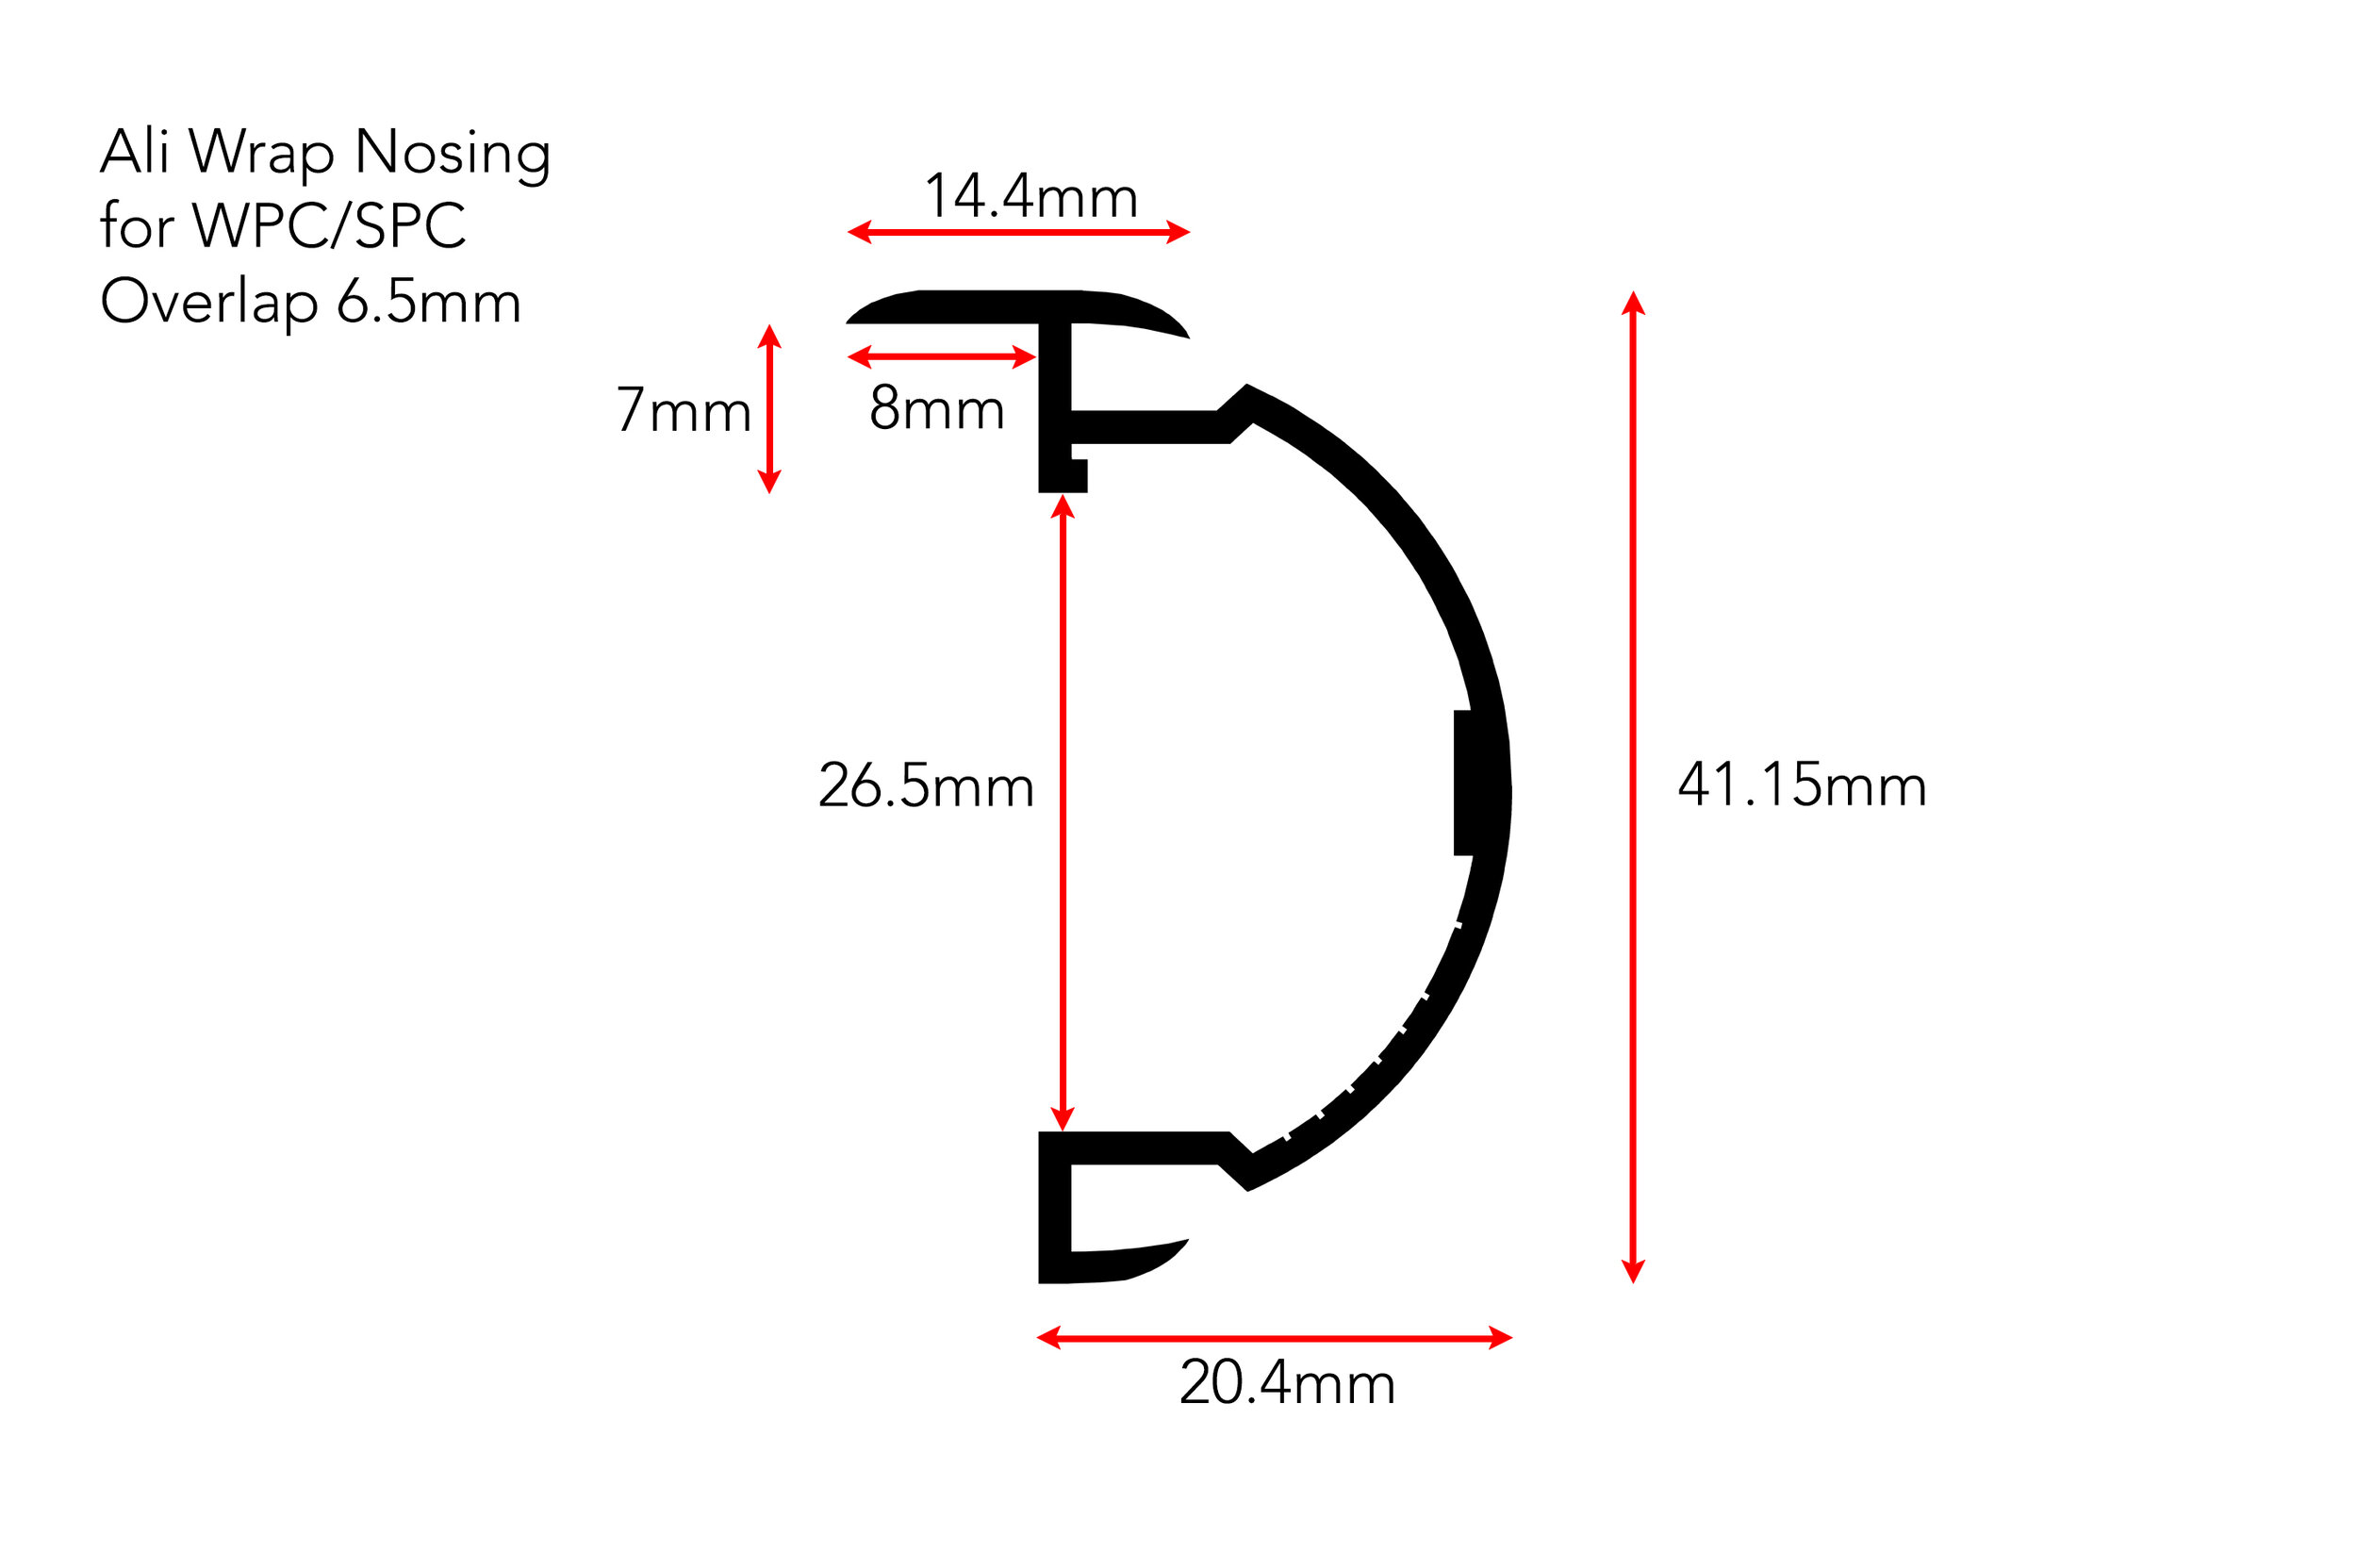 WPC 6.5mm Overlap Wrap Dimensions .jpg